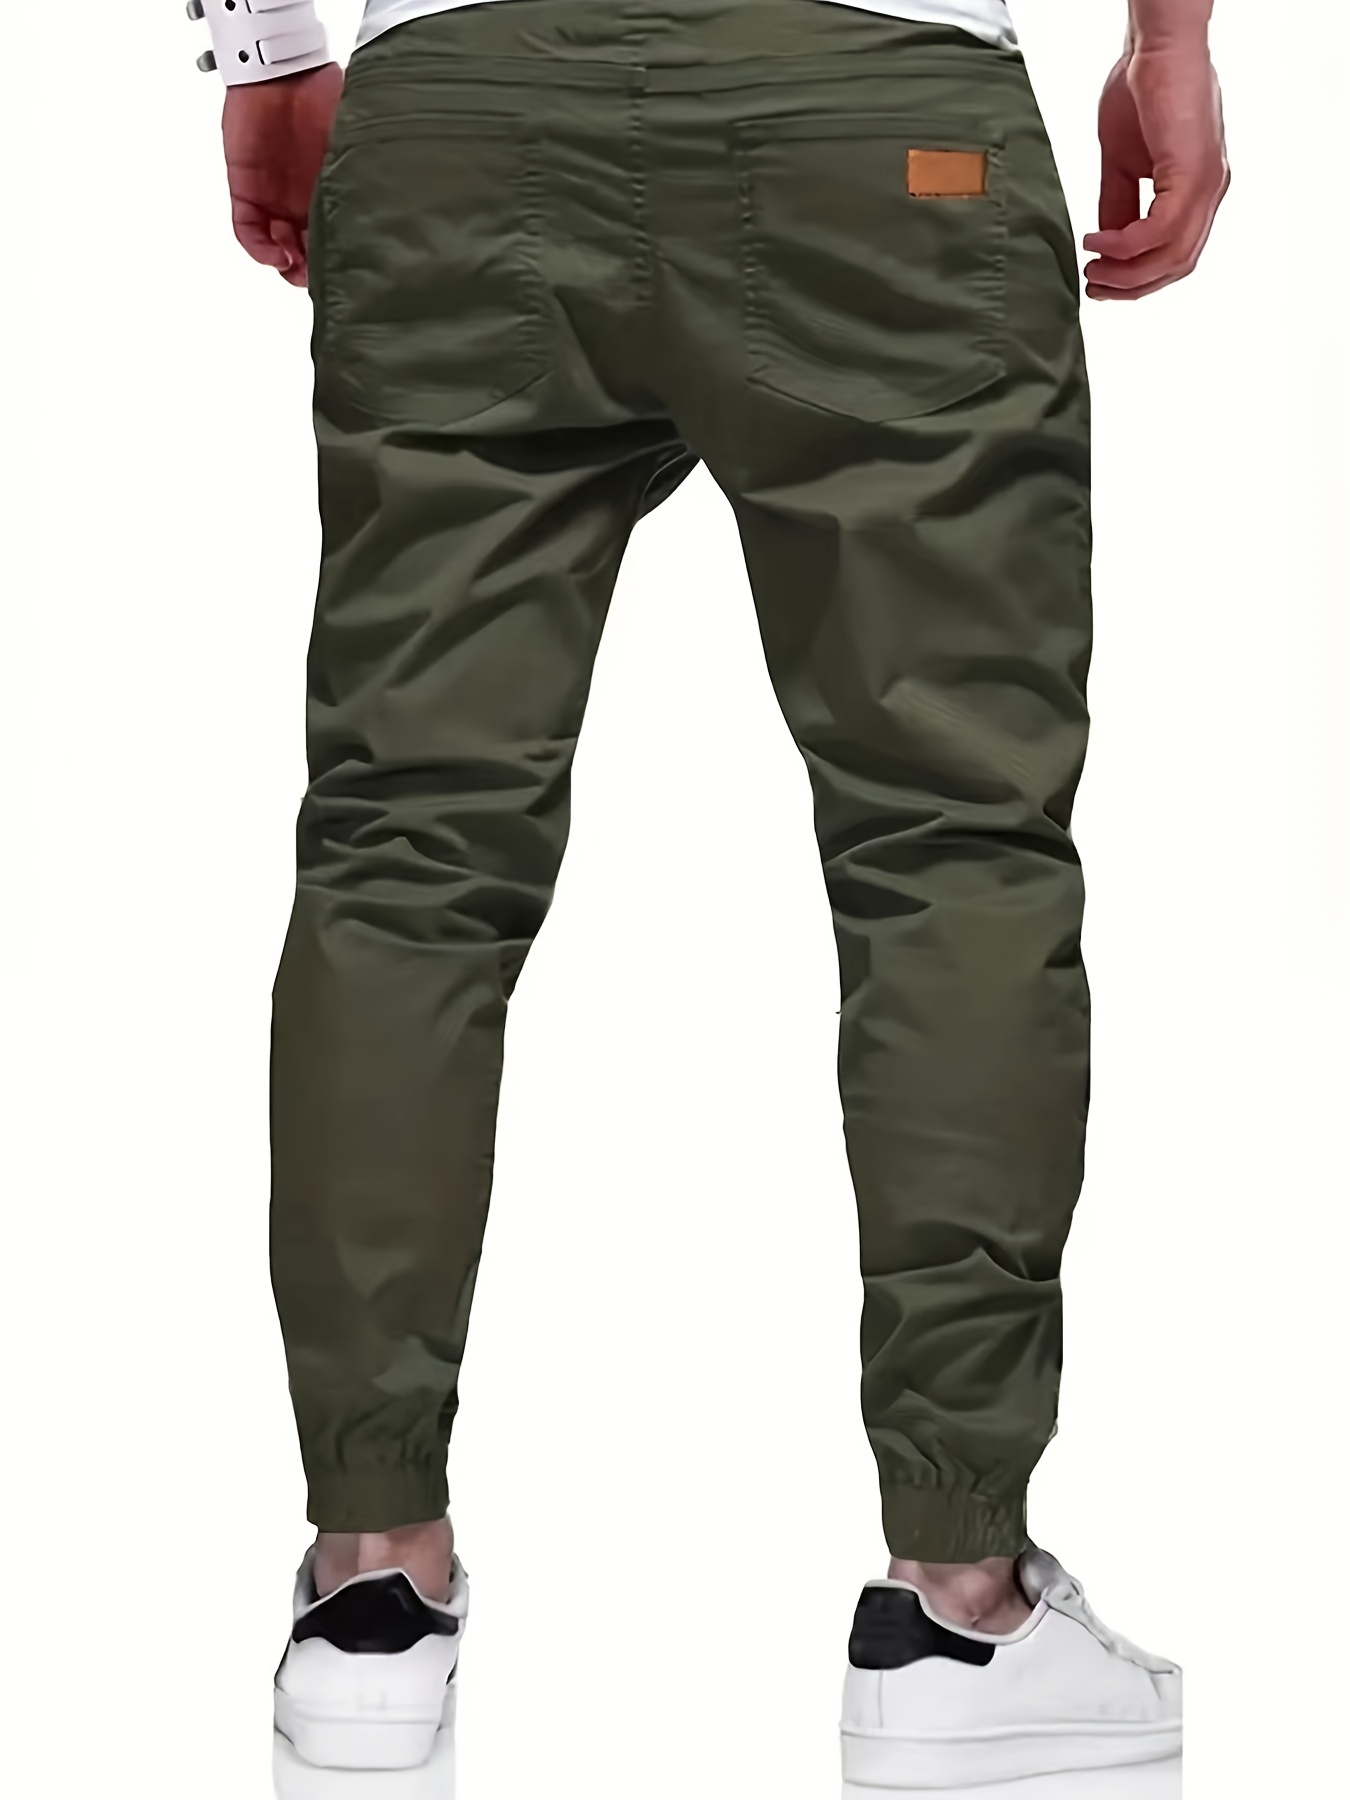 Carhartt WIP - Cargo Pants A/W 2019  Cargo pants outfit men, Pants outfit  men, Mens outfits